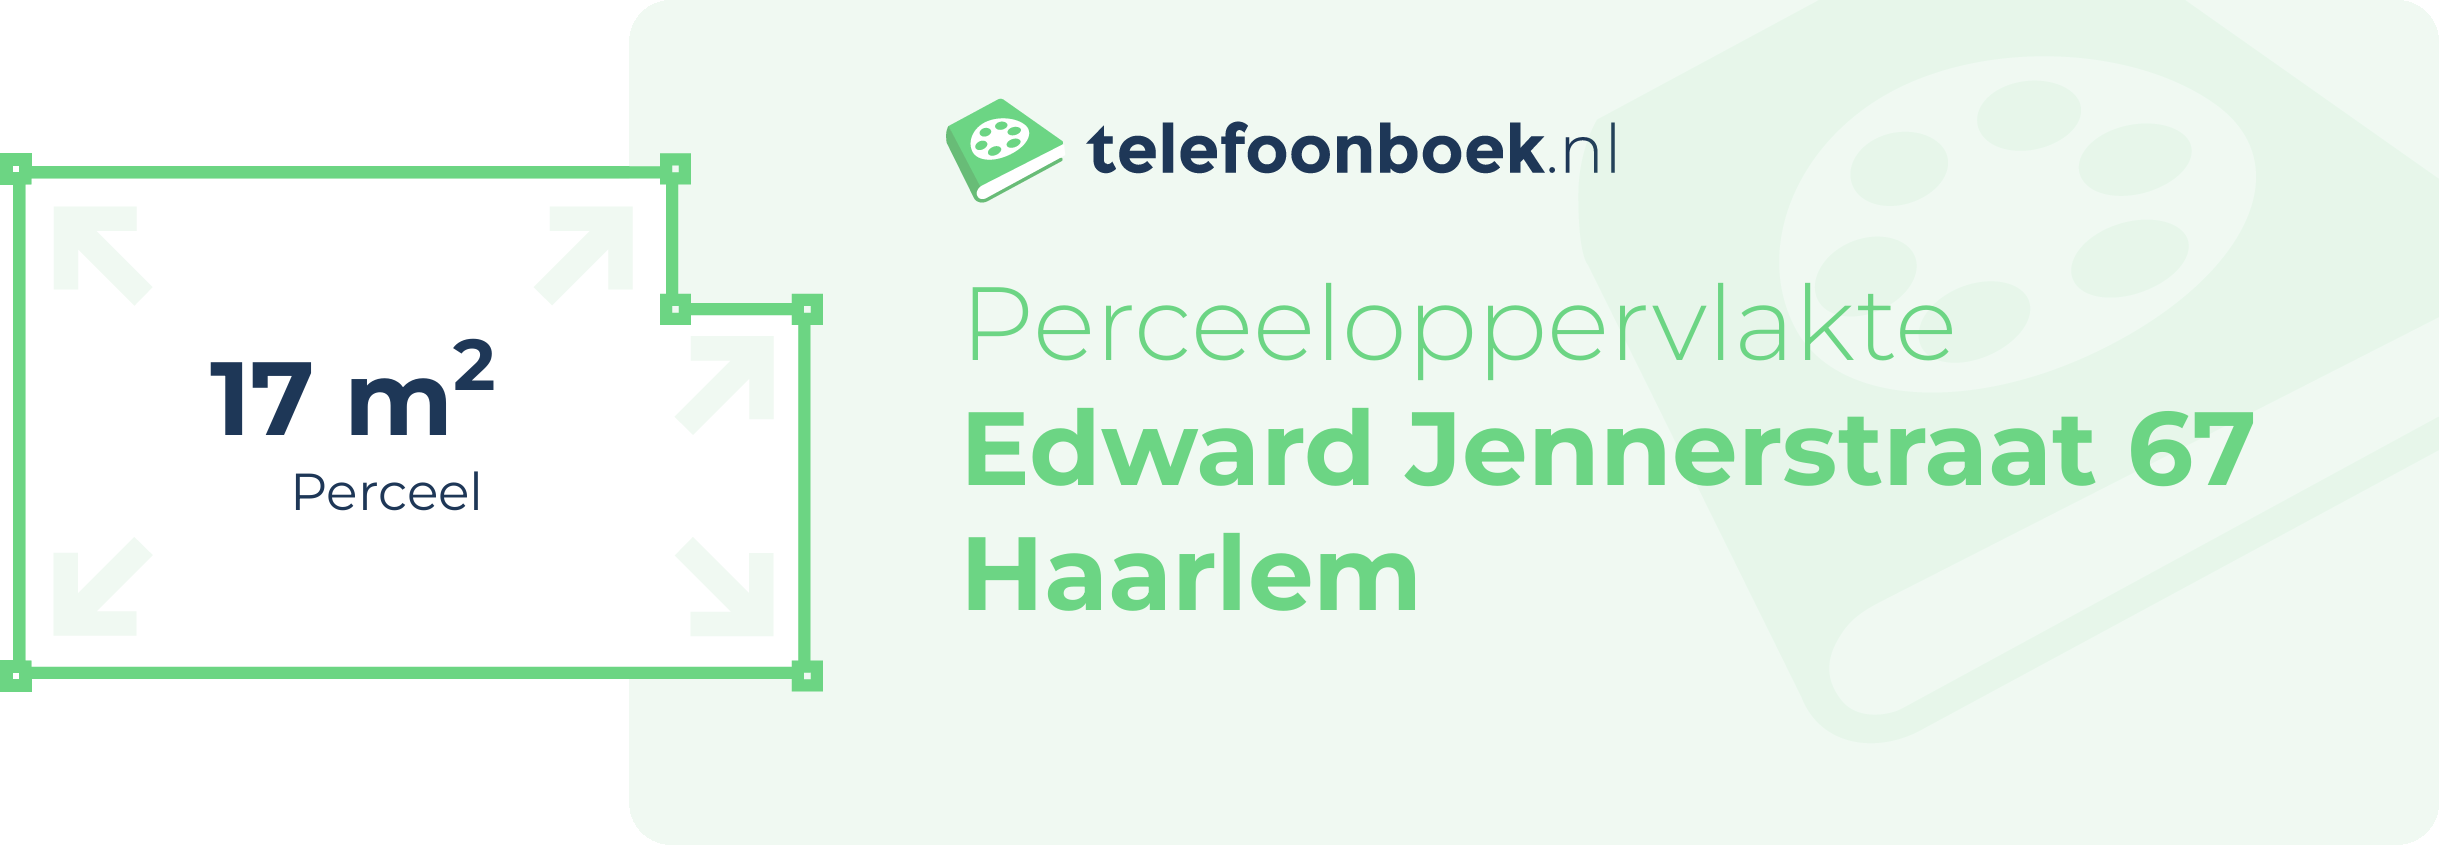 Perceeloppervlakte Edward Jennerstraat 67 Haarlem